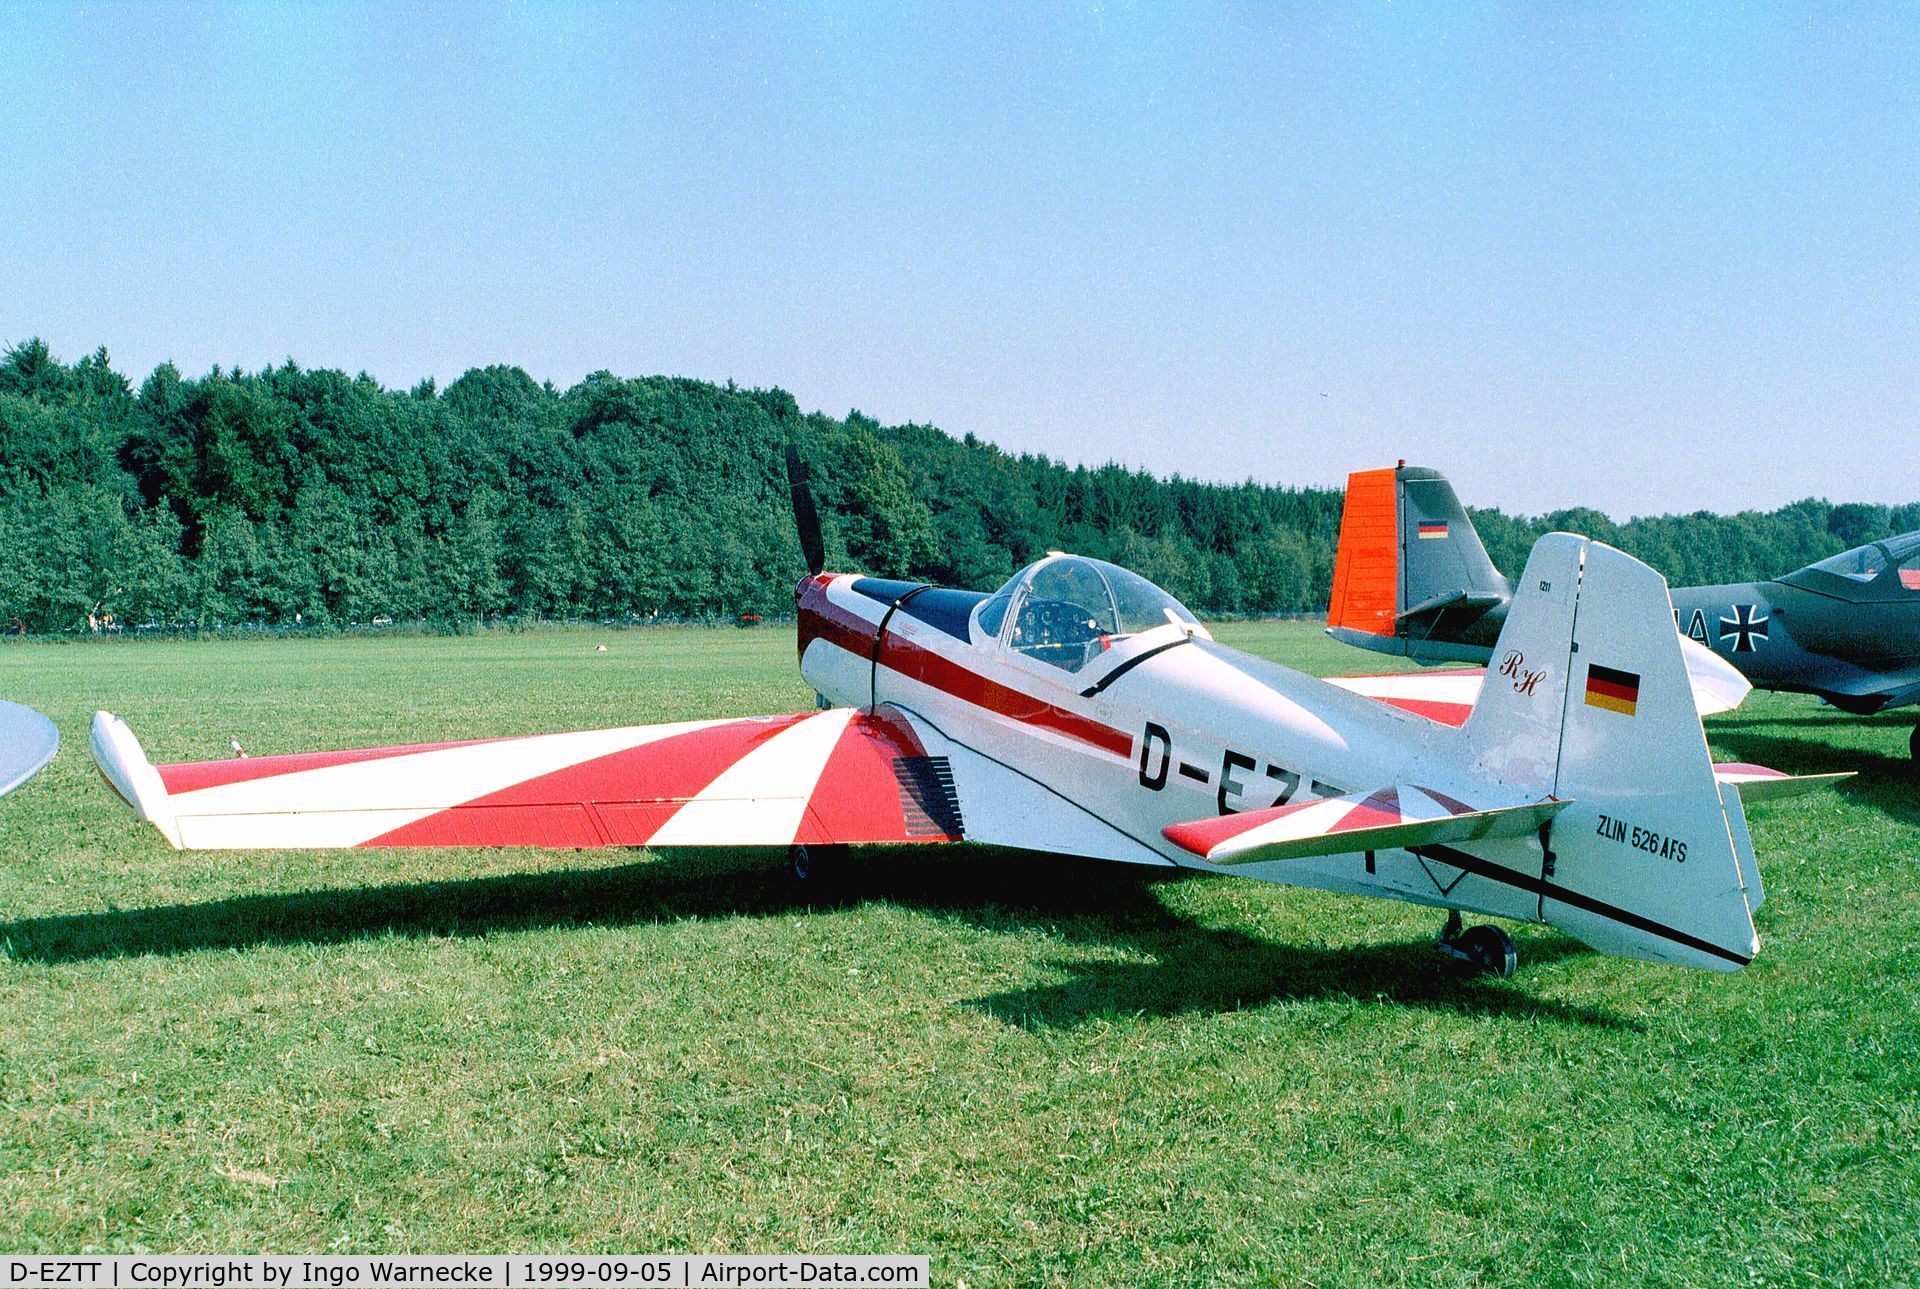 D-EZTT, Zlin Z-526AFS Acrobat C/N 1211, Zlin Z-526AFS at the Langenfeld airshow